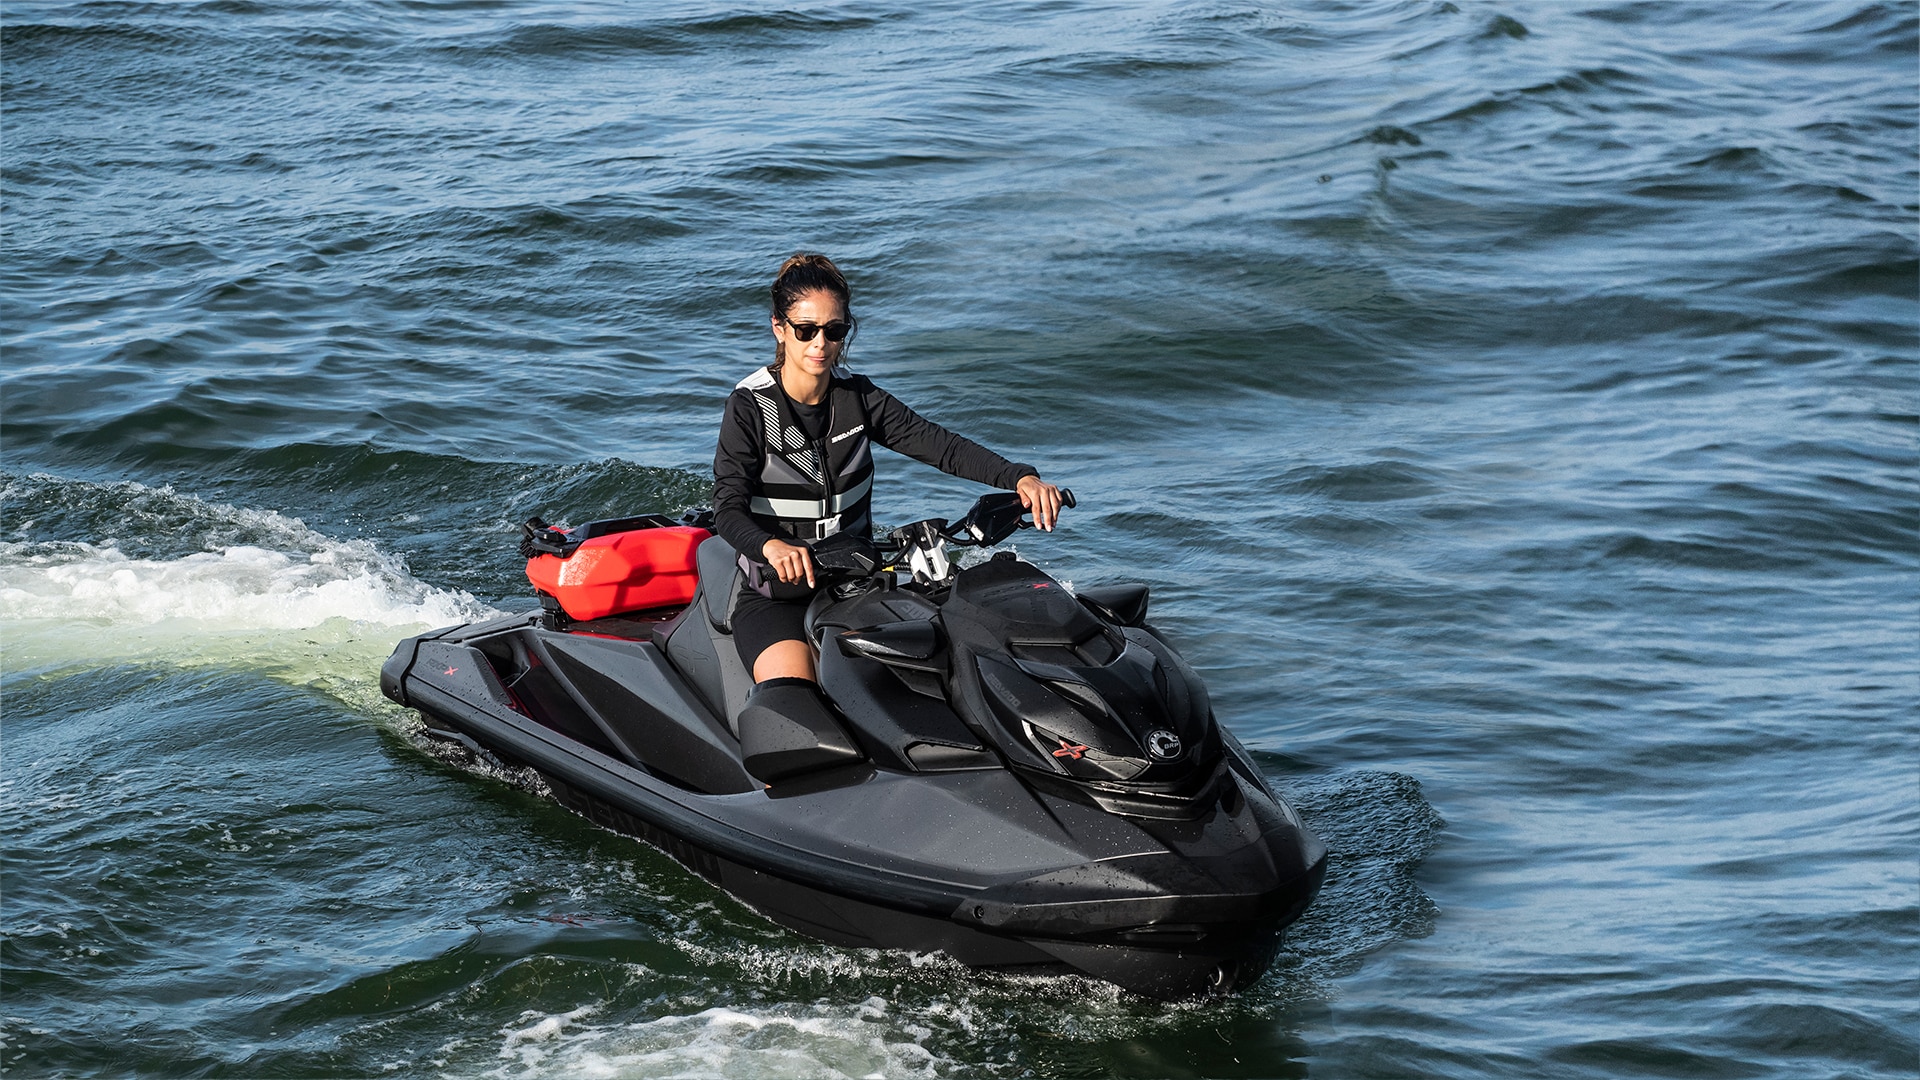 Woman casually riding a Sea-Doo RXP-X personal watercraft